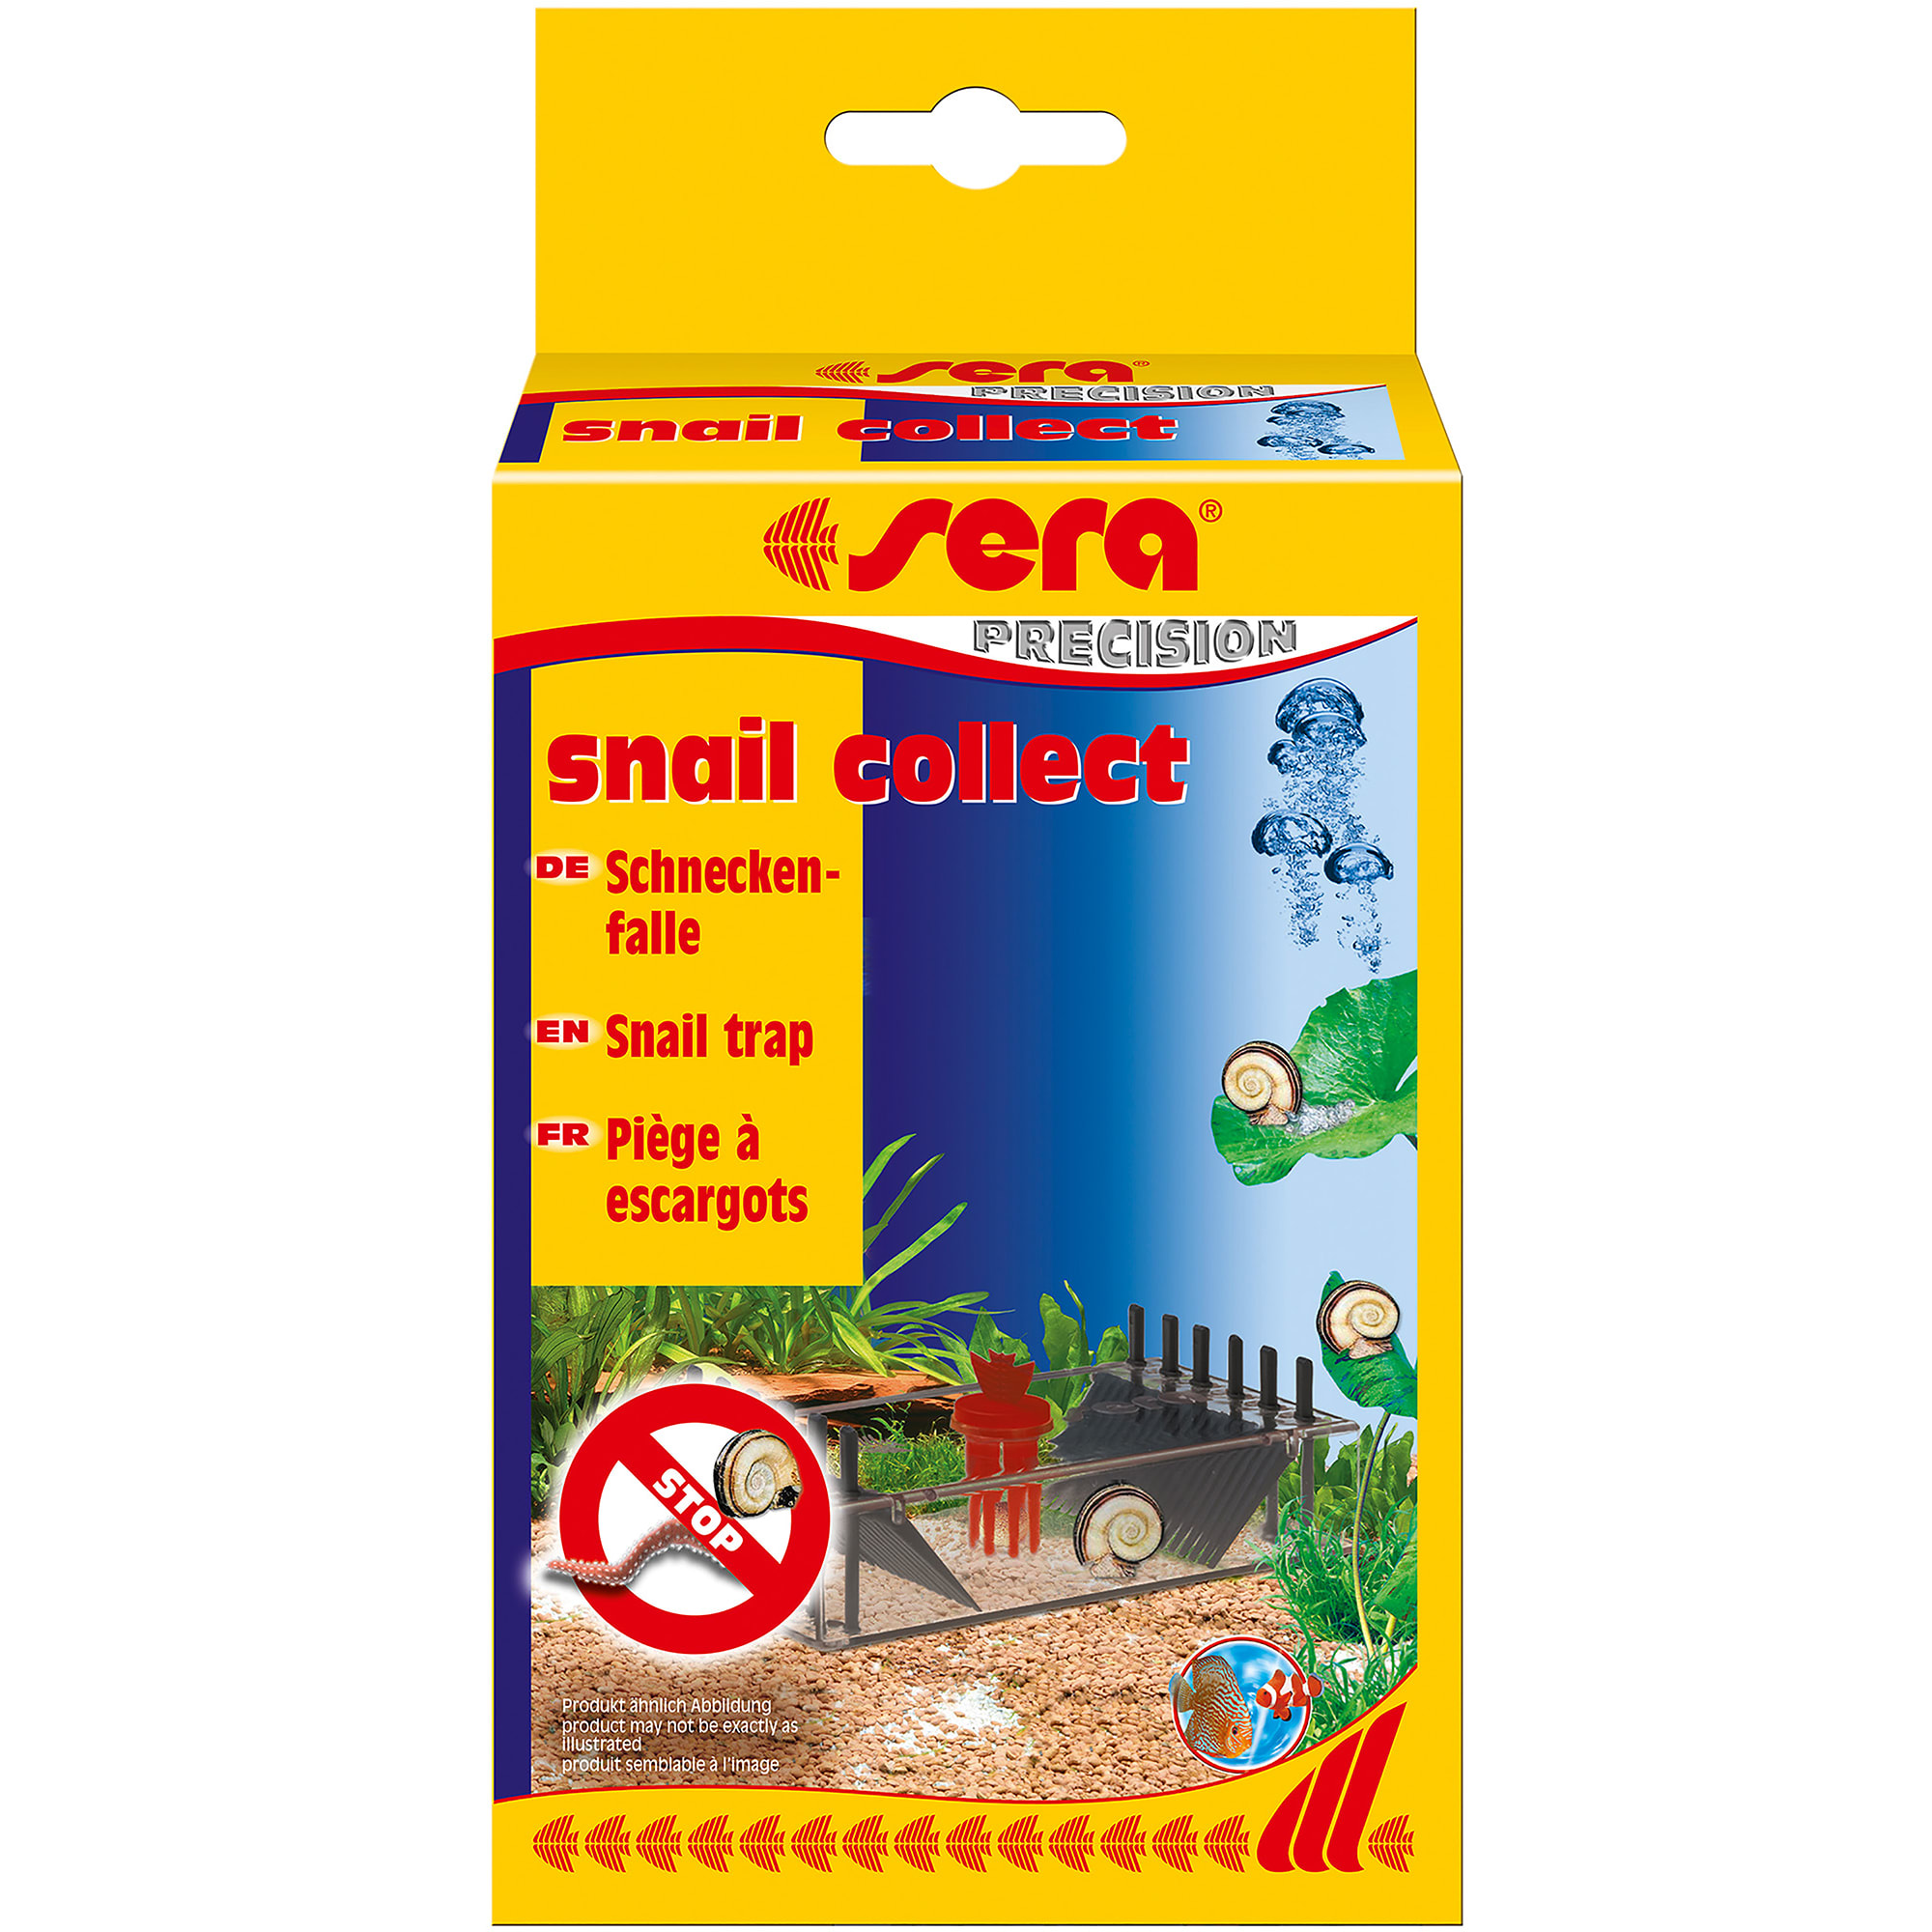 Buy cheap 100 hidden snails 2 cd key - lowest price